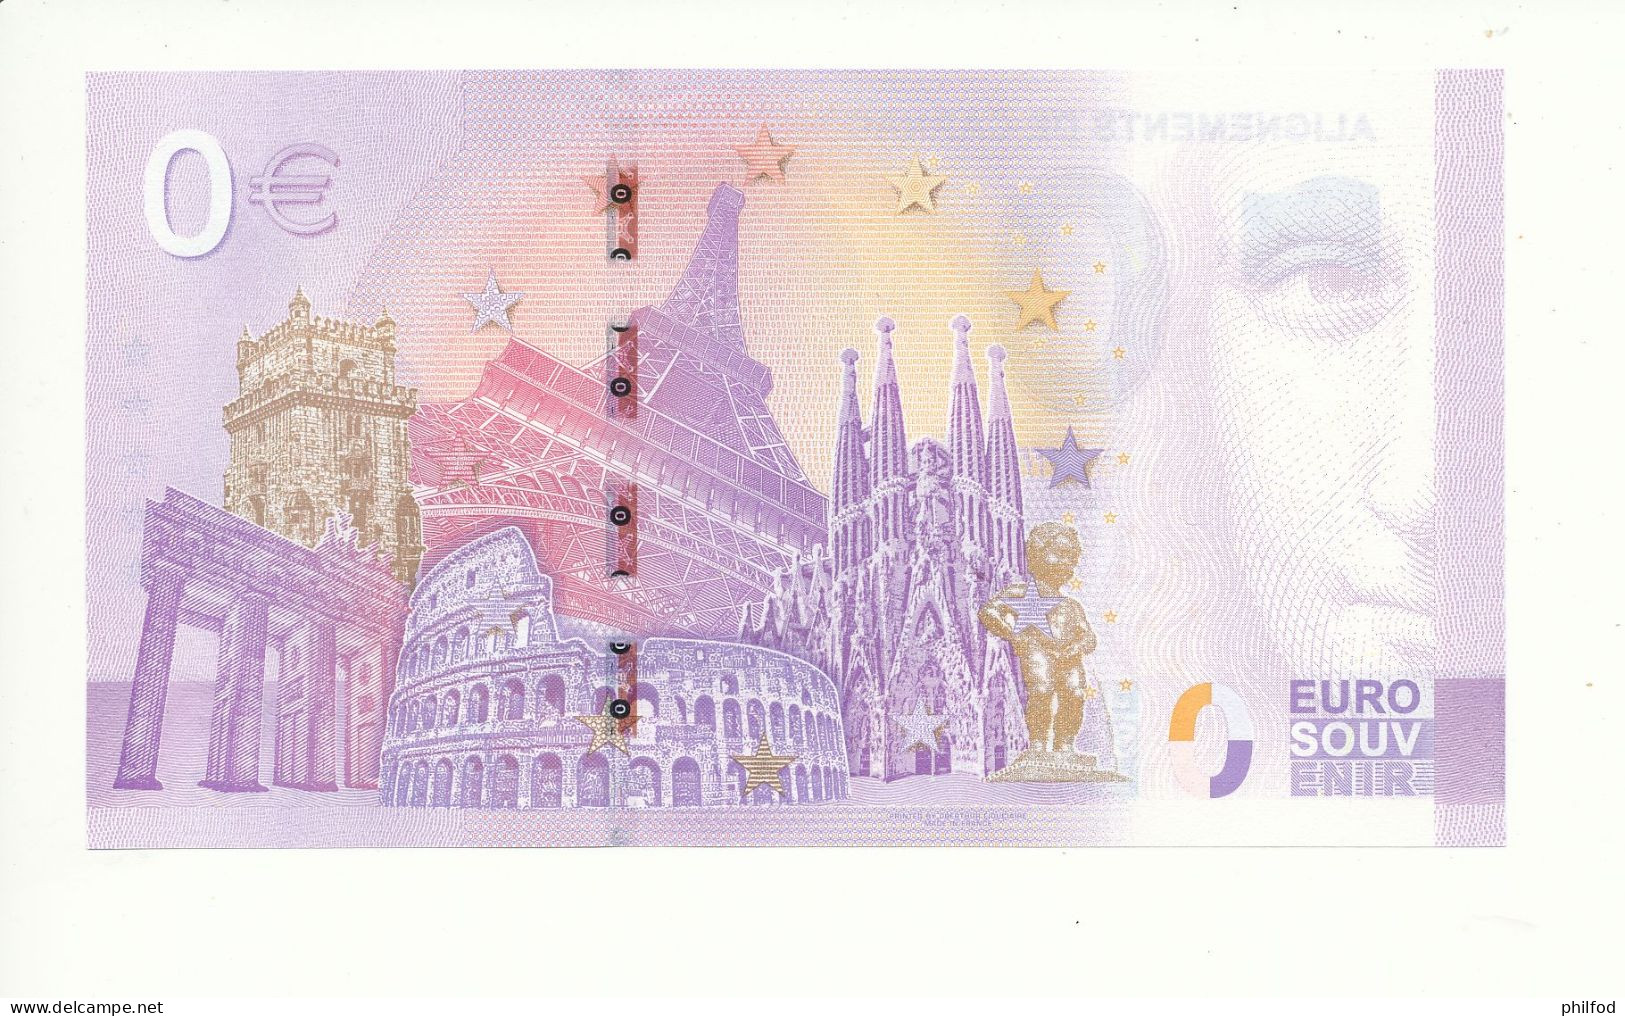 Billet Souvenir - 0 Euro - ALIGNEMENTS DE CARNAC - UEGE - 2023-2 - N° 6631 - Lots & Kiloware - Banknotes